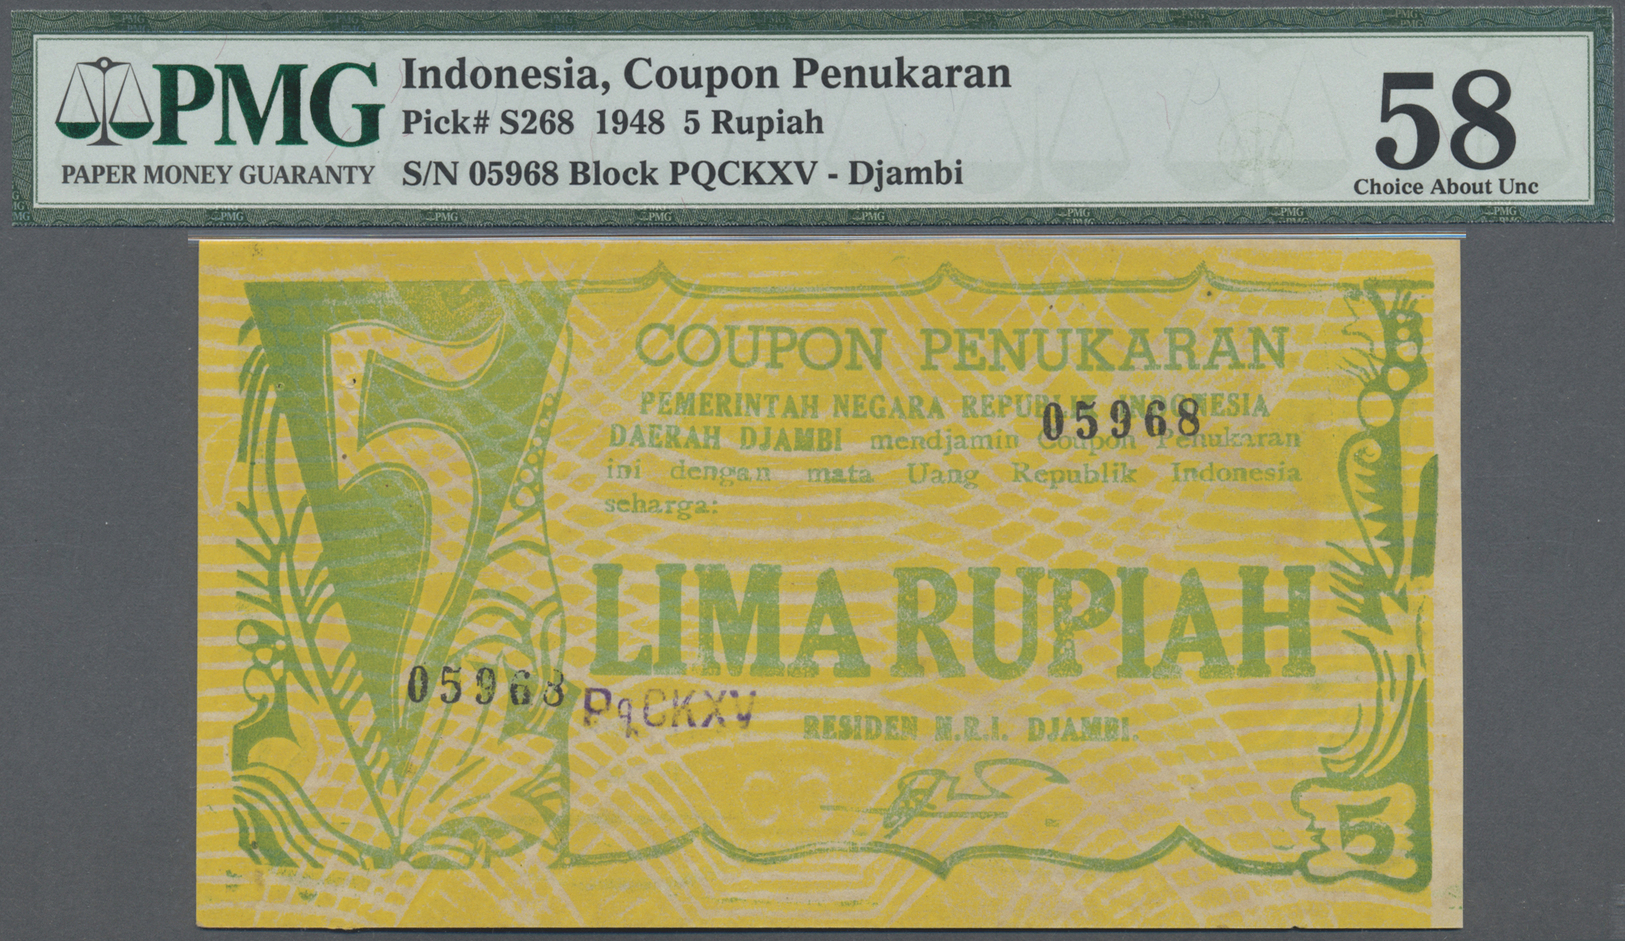 01200 Indonesia / Indonesien: Djambi 5 Rupiah "Coupon Penukaran" (Redemption Coupon) 1948, P.S268 , Great Original Shape - Indonesia